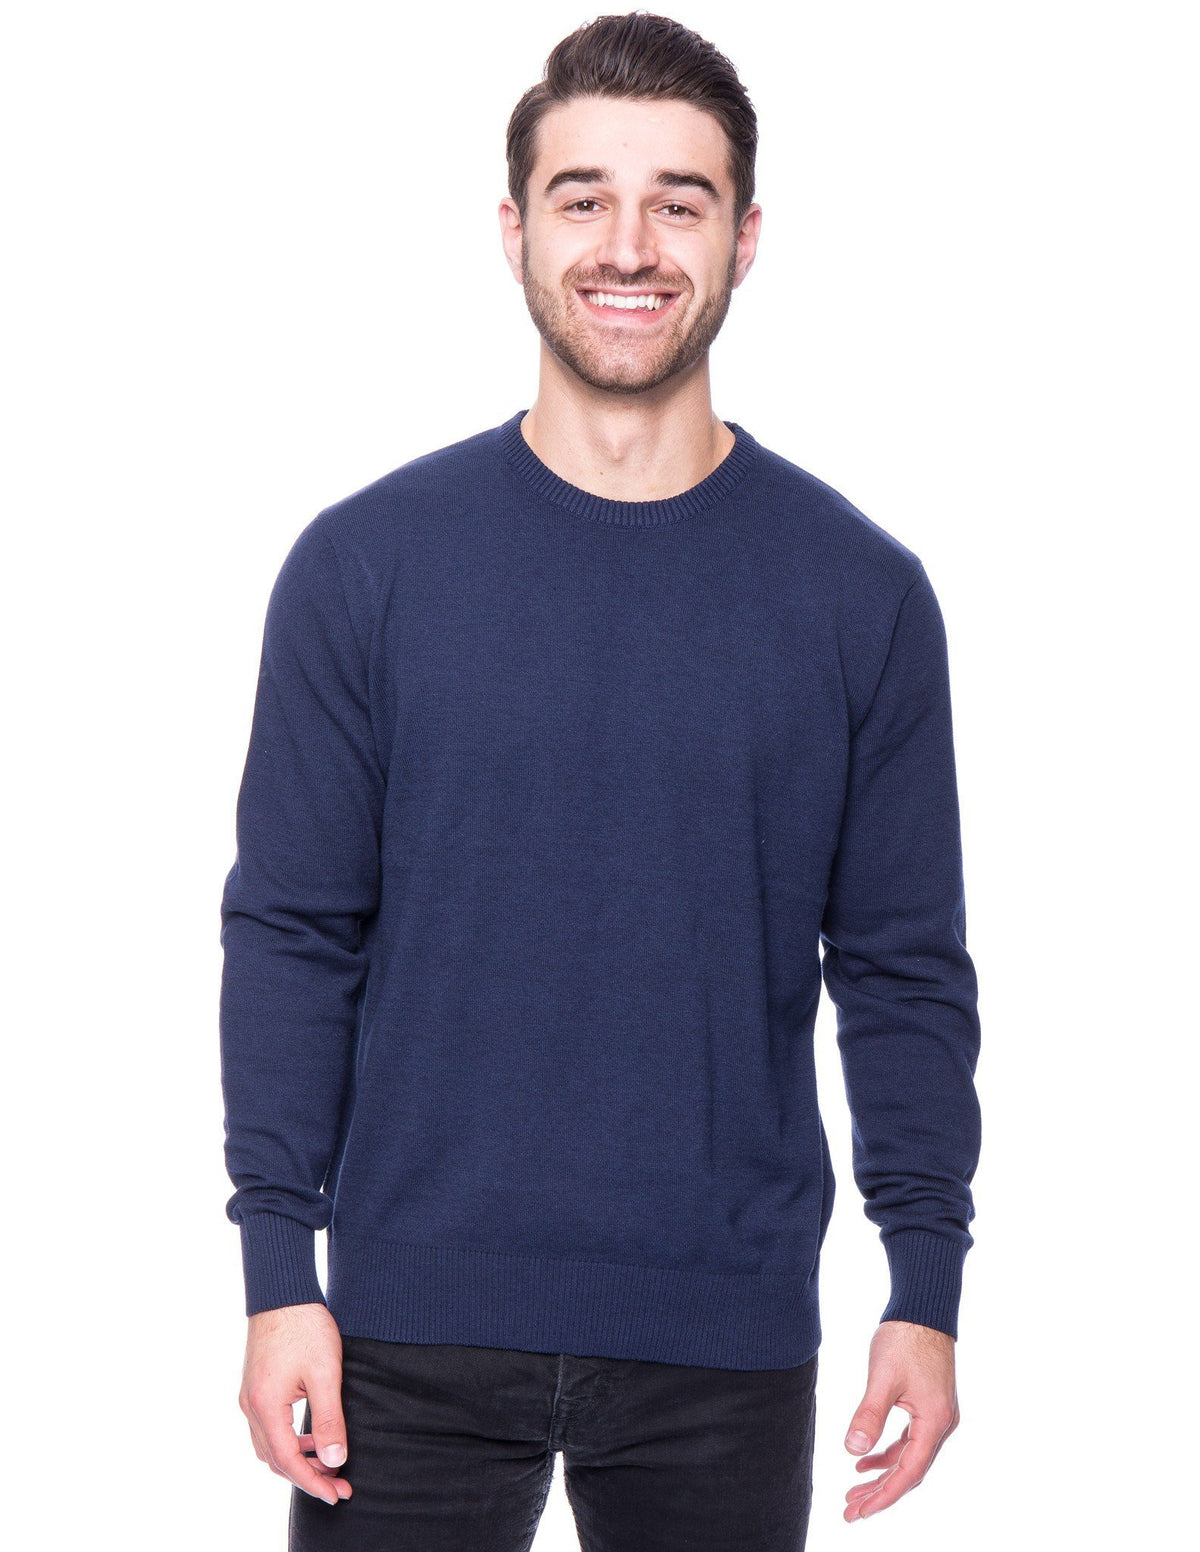 Men's 100% Cotton Crew Neck Sweater - Navy